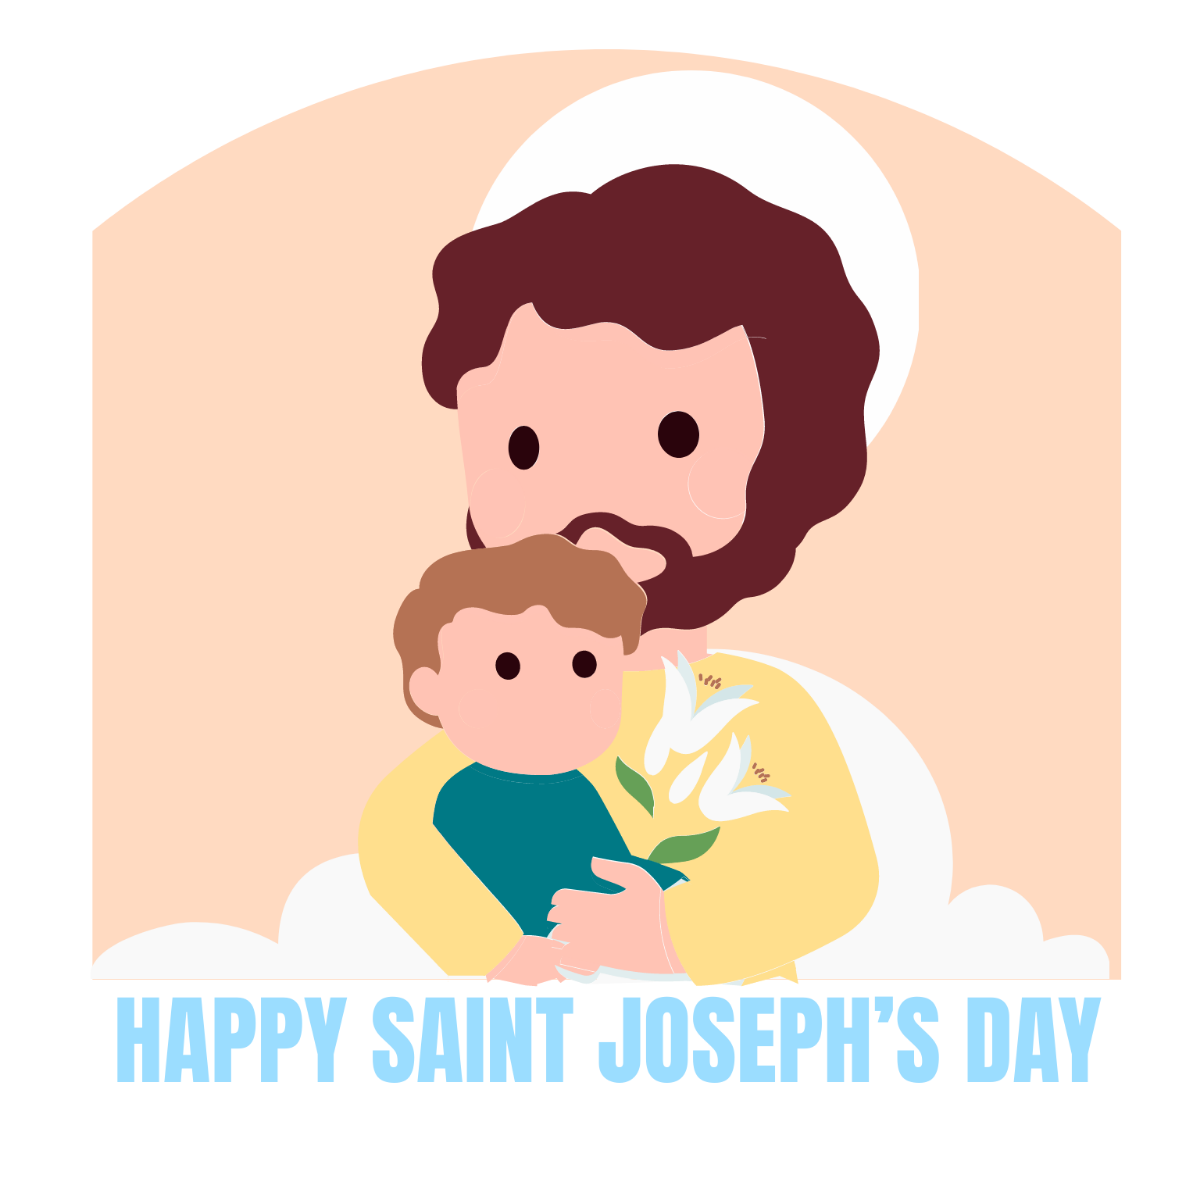 Free Happy Saint Joseph's Day Vector Template